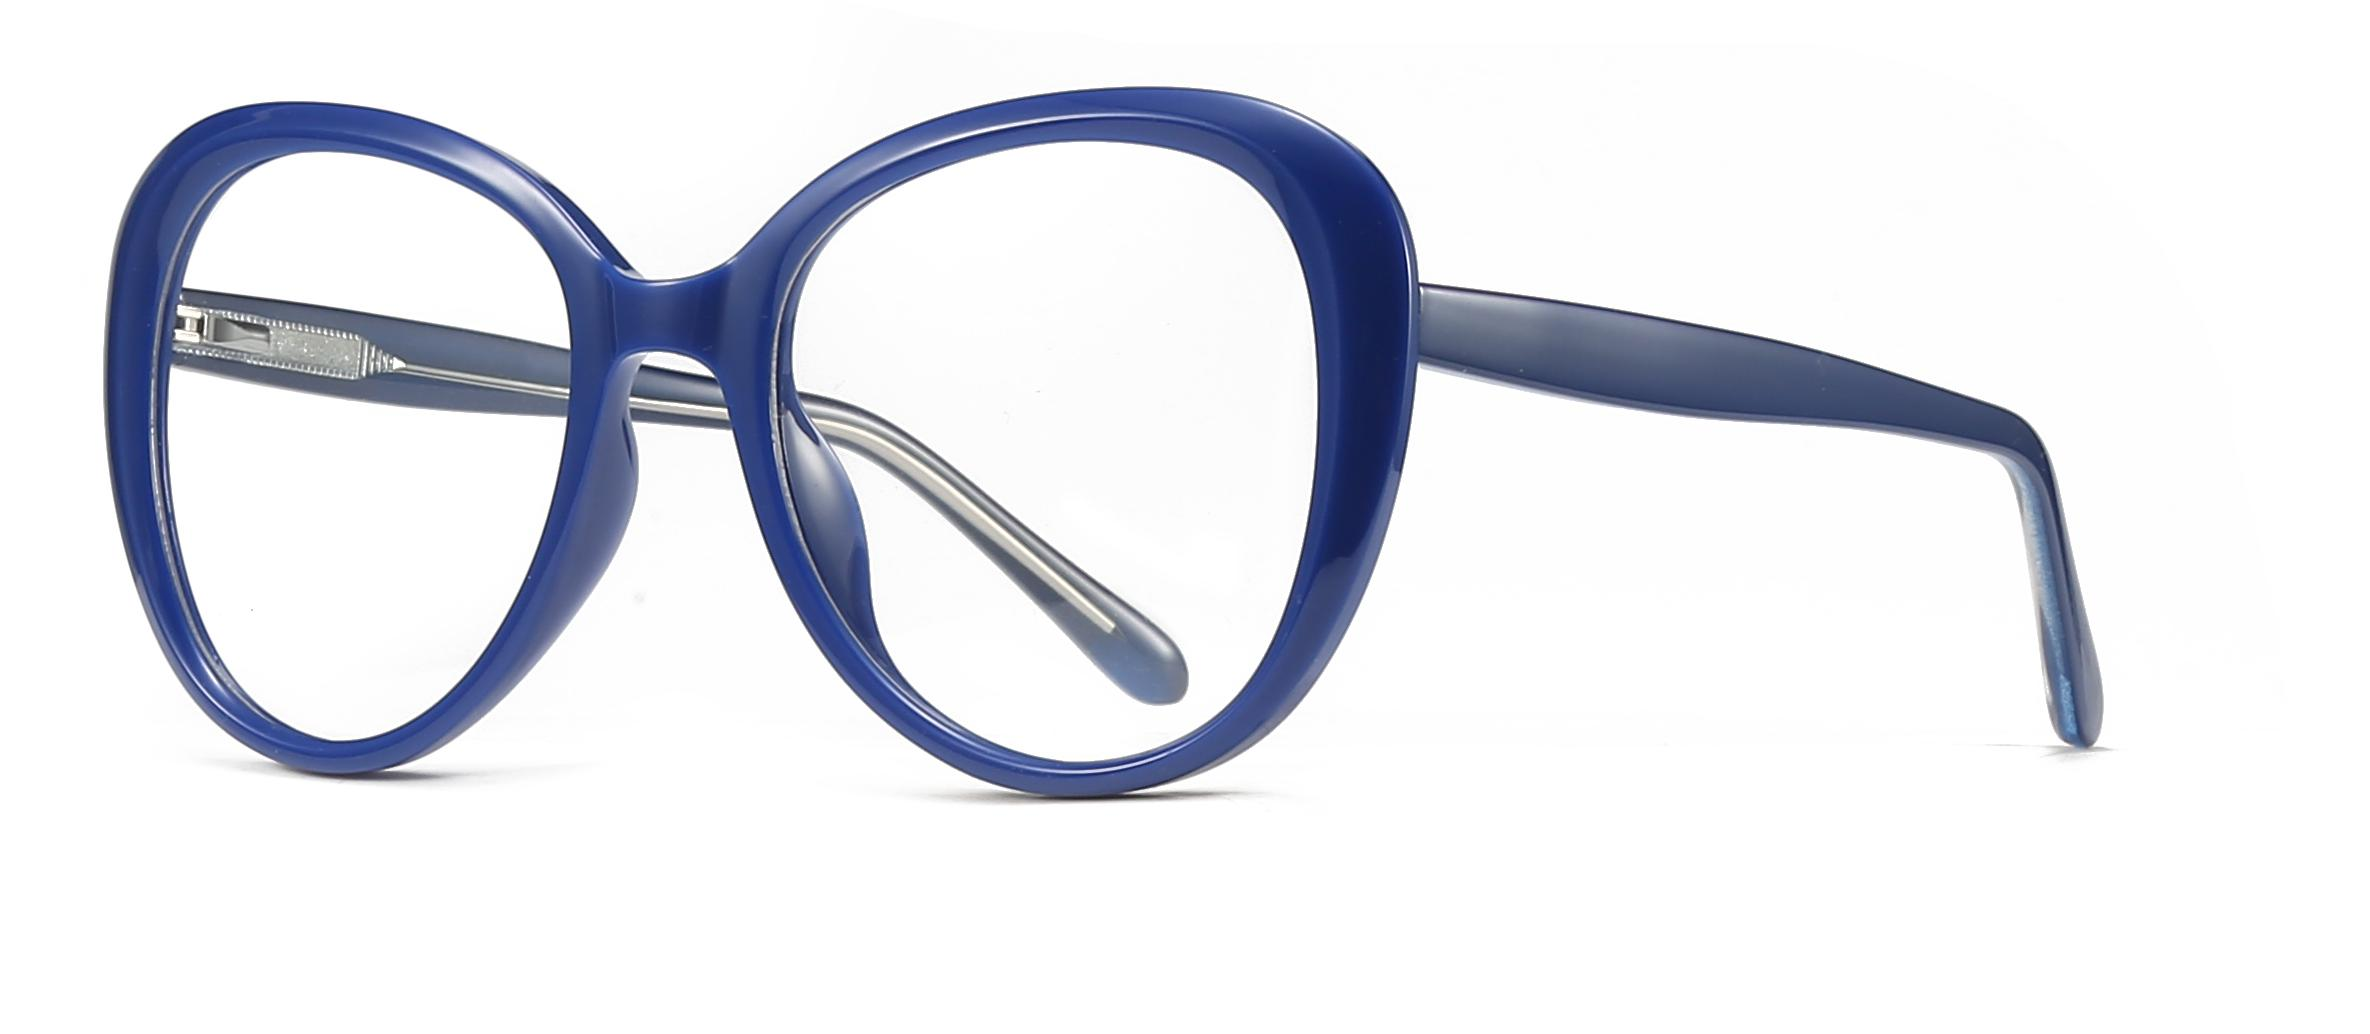 Estoque grande moldura redonda do FRON TR90+CP Anti-azul-quadro óptico #2013